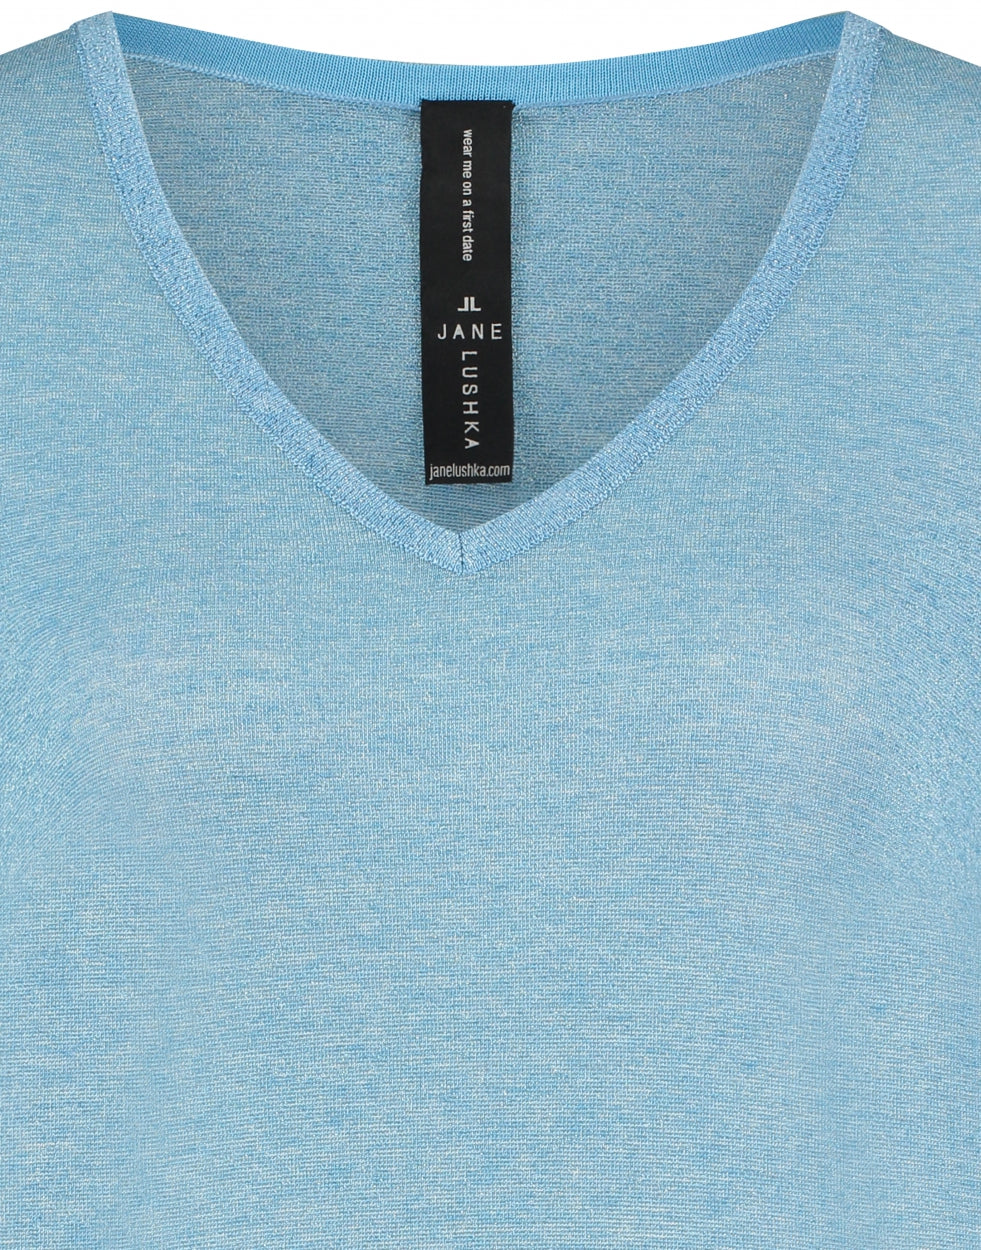 T shirt Leny | Blue ocean